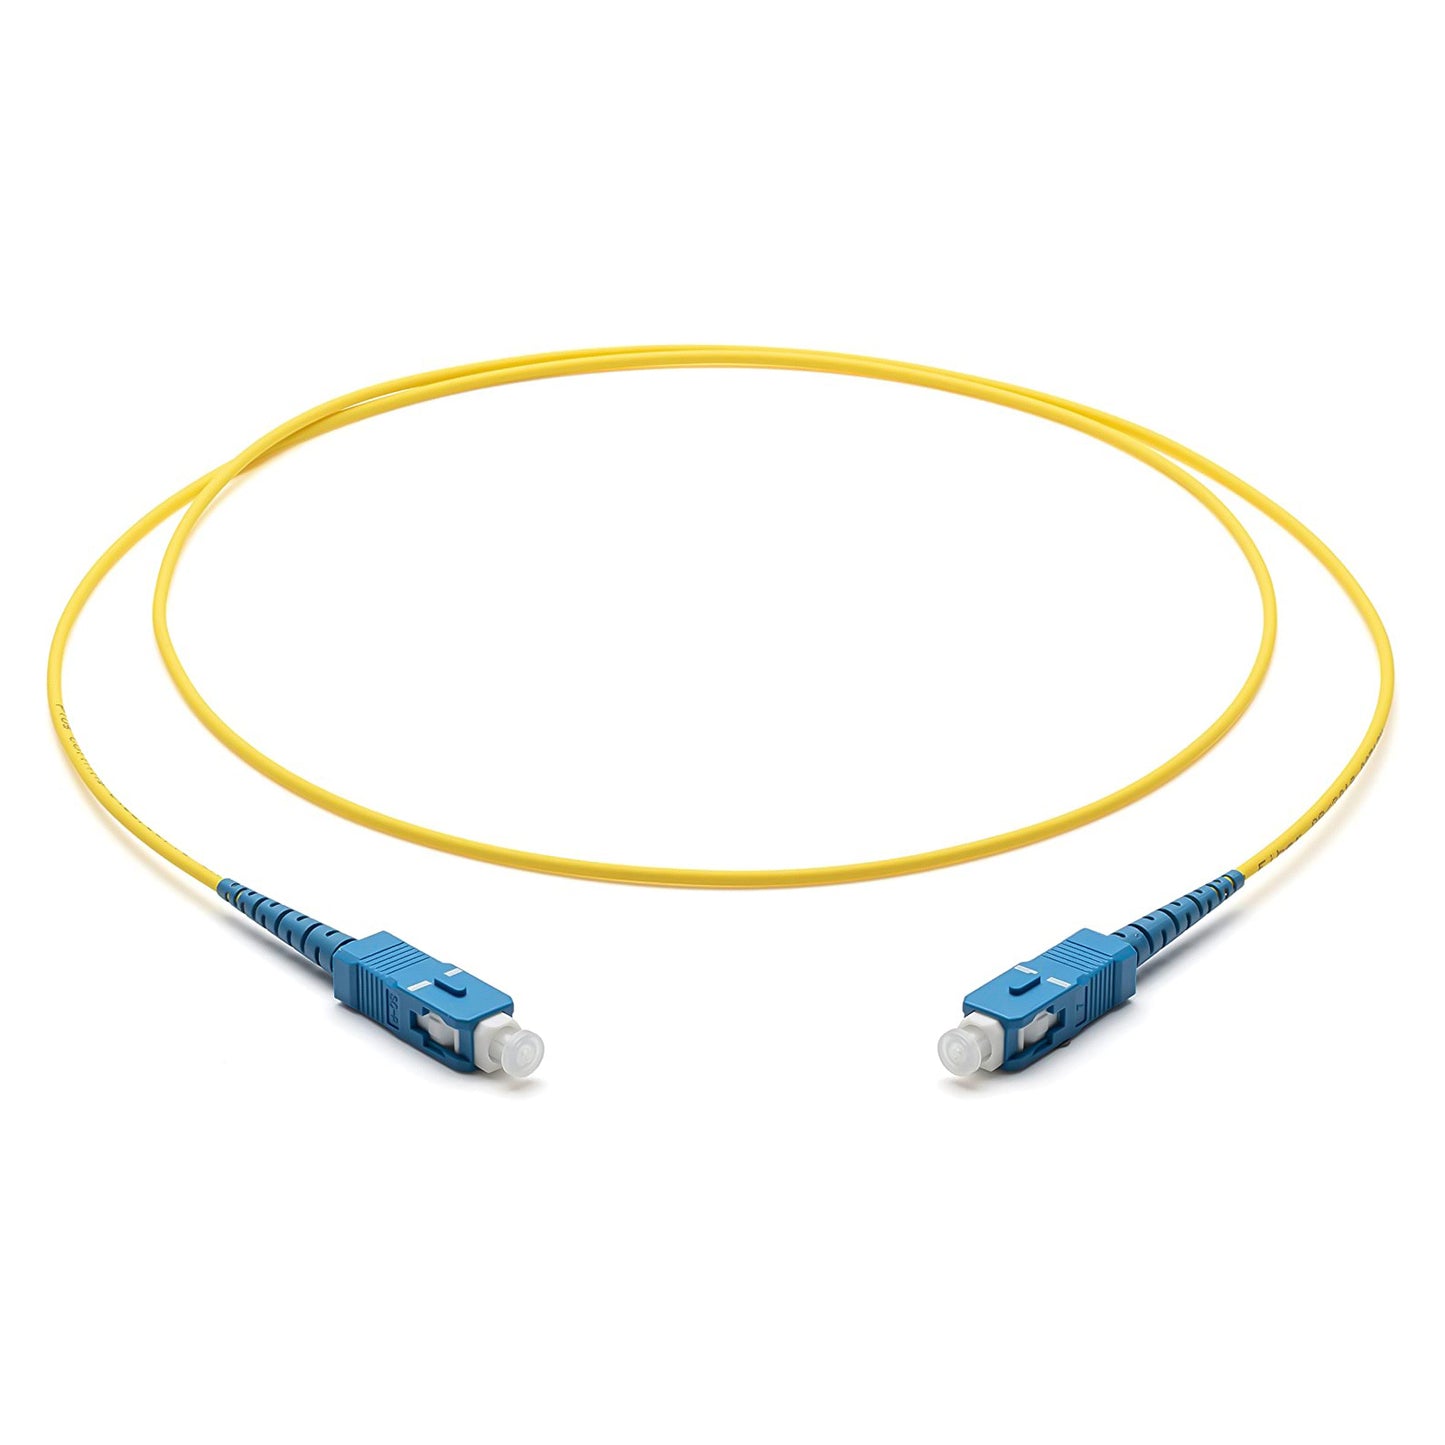 GBC 5m fiber optic patch cable, cable with SC/APC connectors, single mode simplex type, 9/125 micron fiber diameter